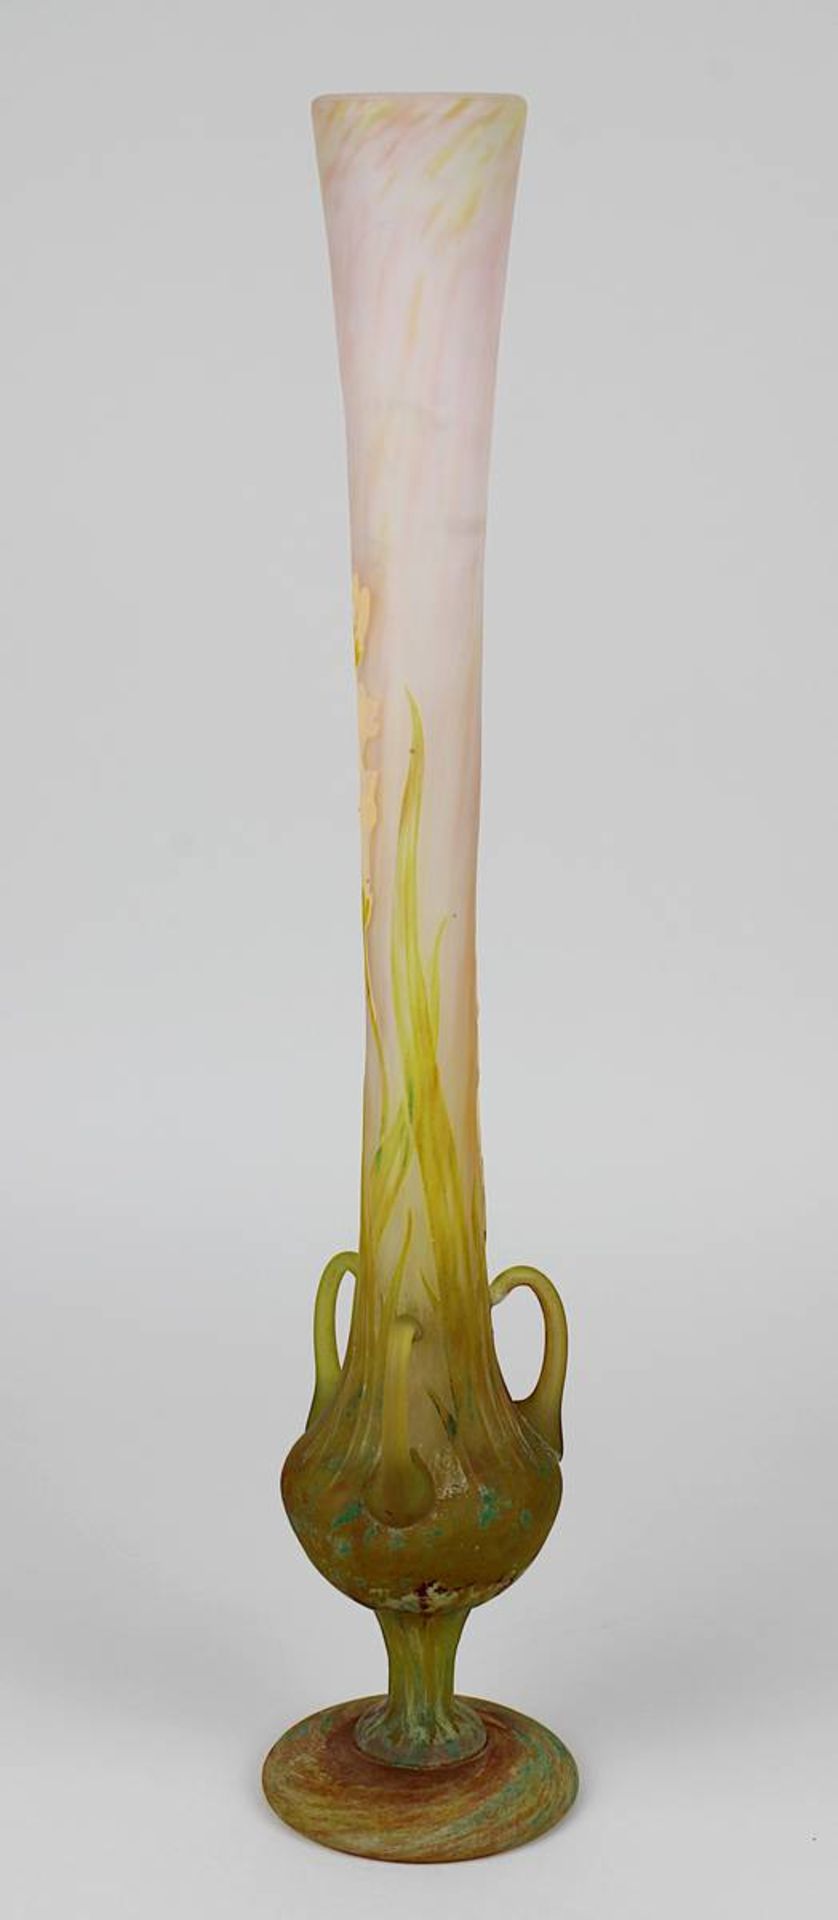 Daum Jugendstil-Vase Freesias, Nancy 1910 - 12, Entwurf wohl Henry Bergér, Luxusglas-Serie, Modell - Bild 7 aus 12